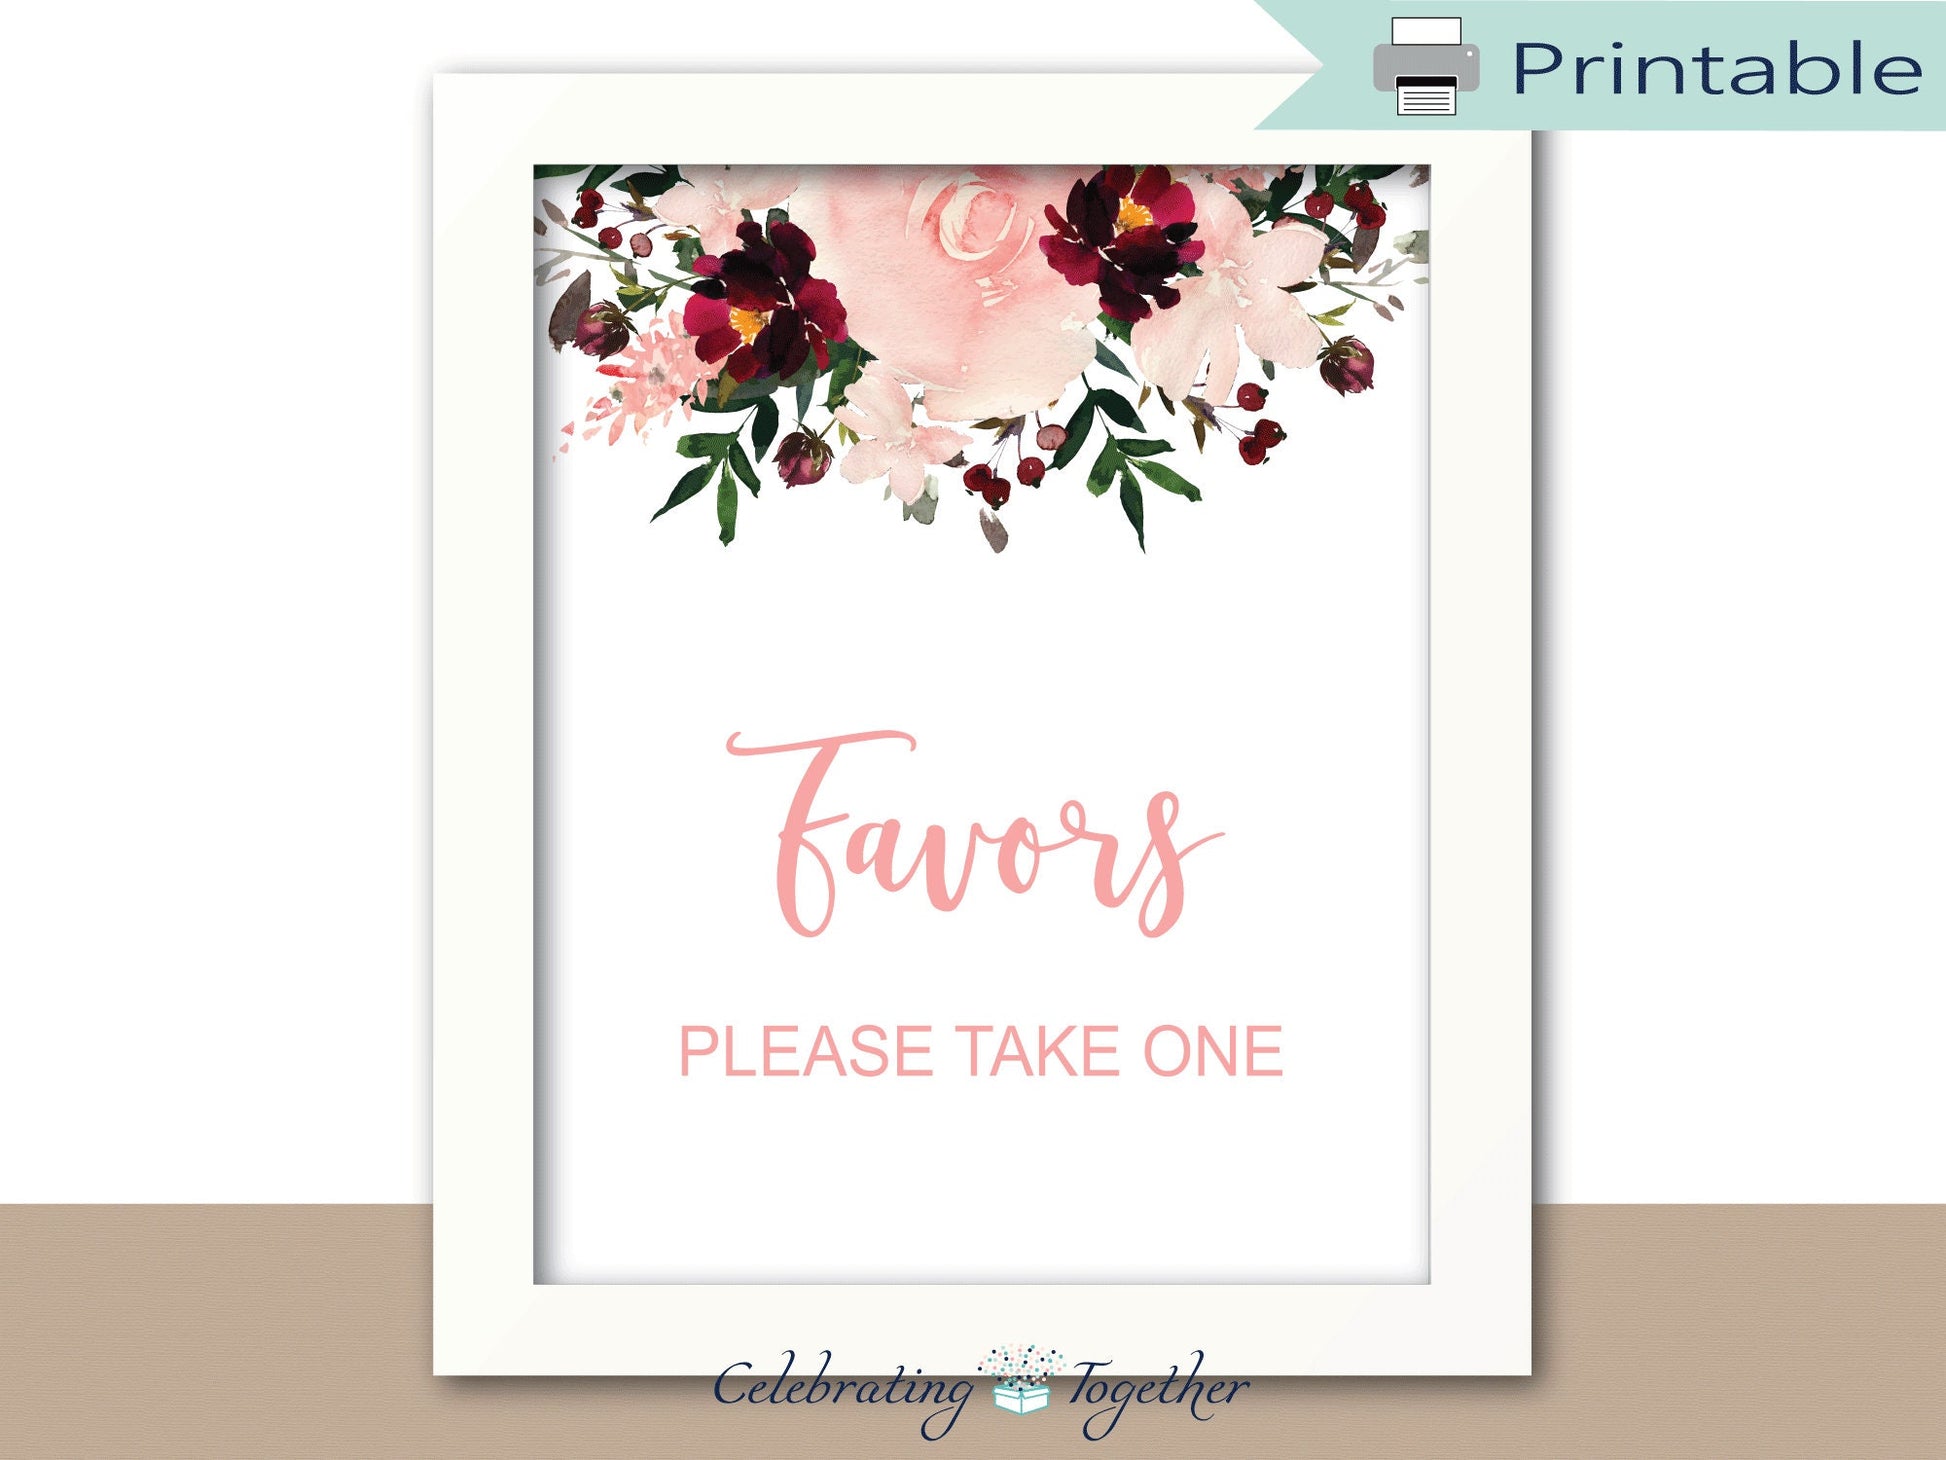 Printable favors sign - please take one bridal shower decor